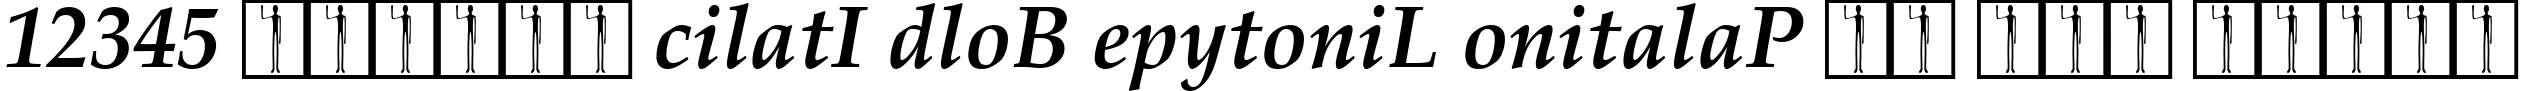 Dynamic Palatino Linotype Bold Italic Font Preview https://safirsoft.com